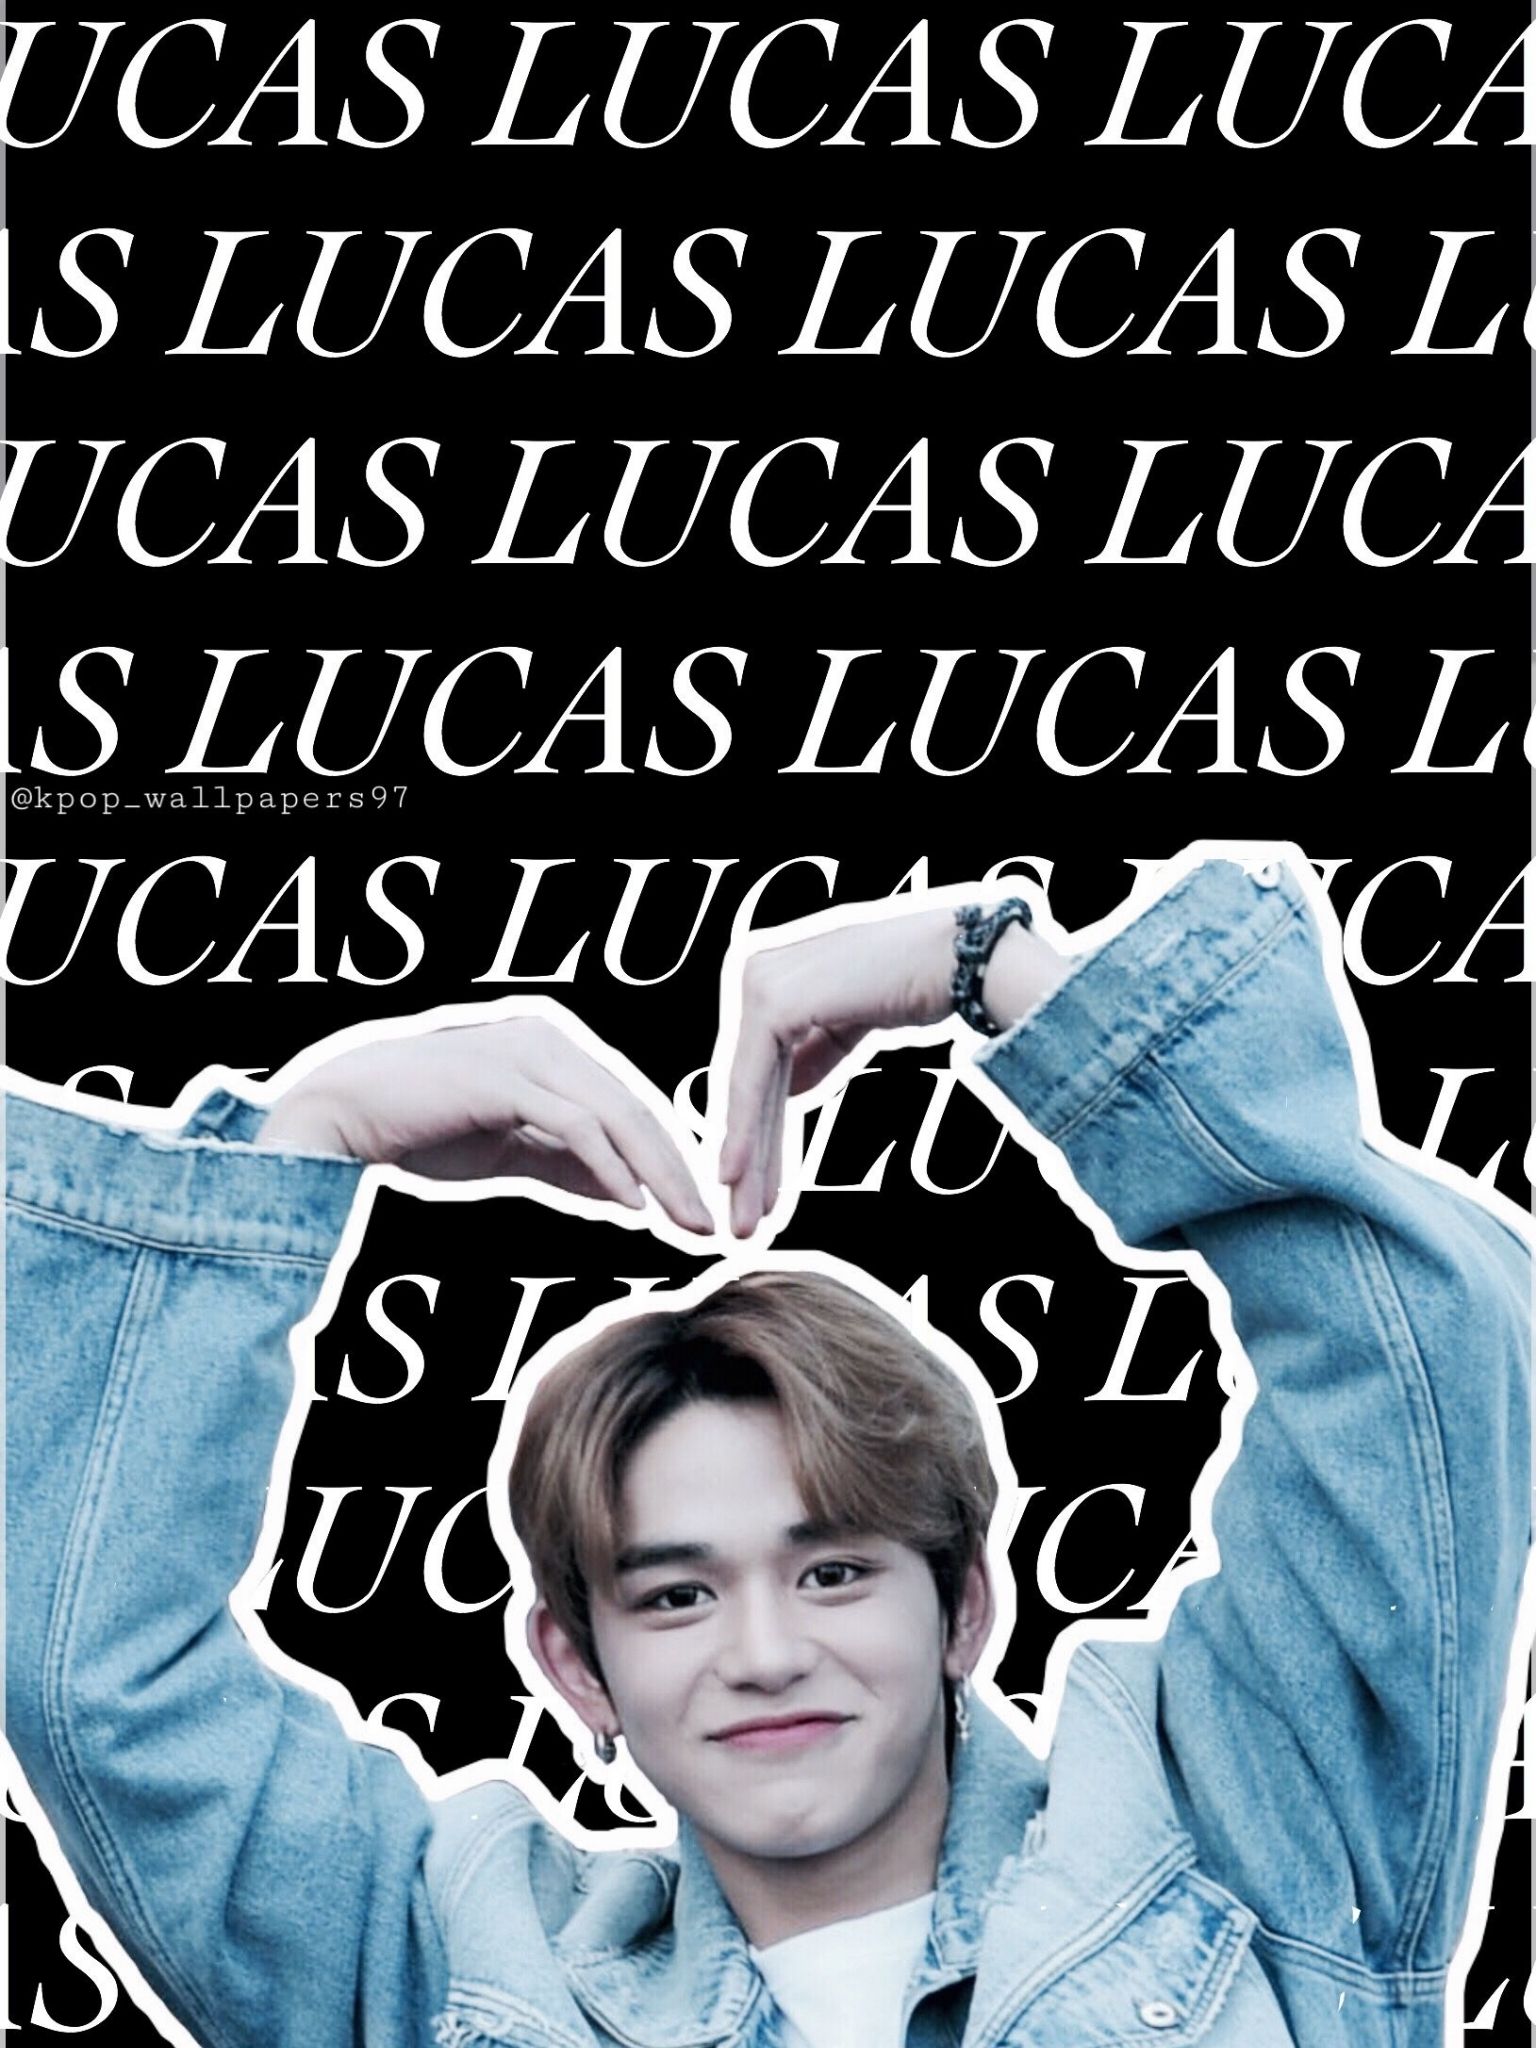 Free download Lucas NCT lucas lucasnct lucasnctu lucaswallpaper